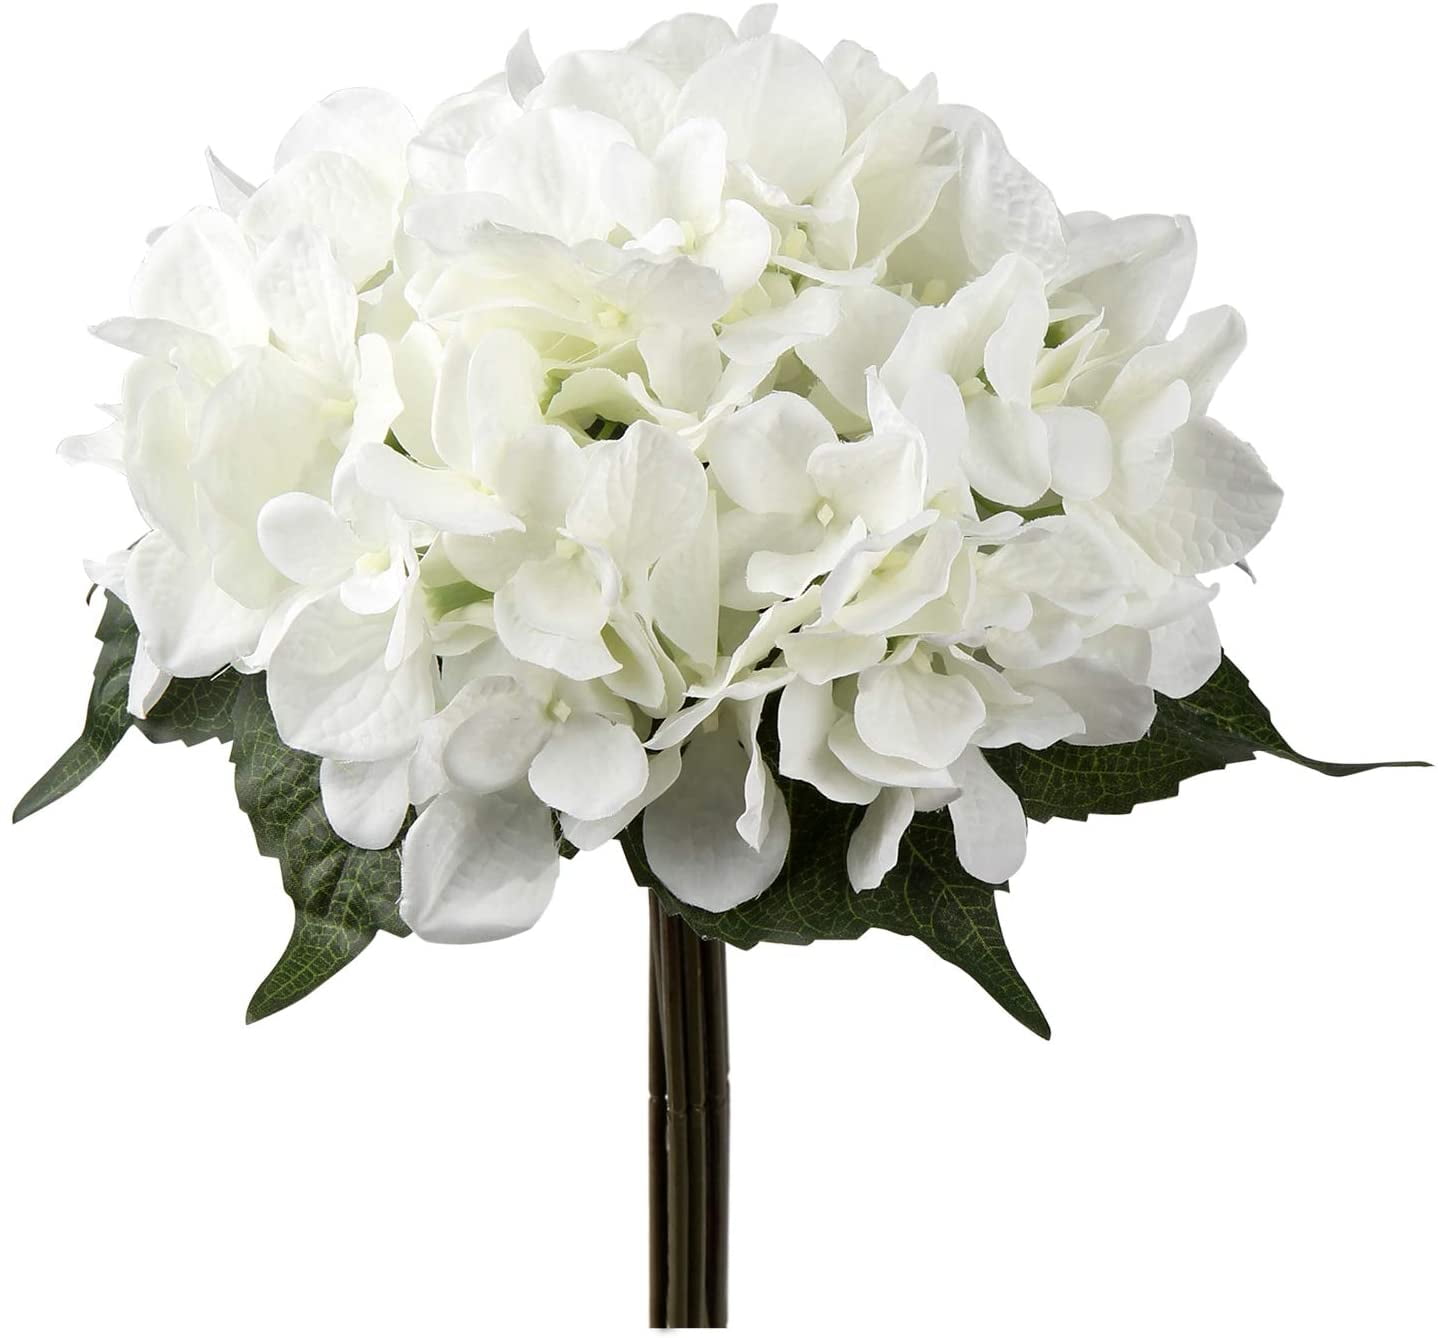 WHITE 41" tall 4 Stems Silk Hydrangea Artificial Flowers Wedding Centerpieces 